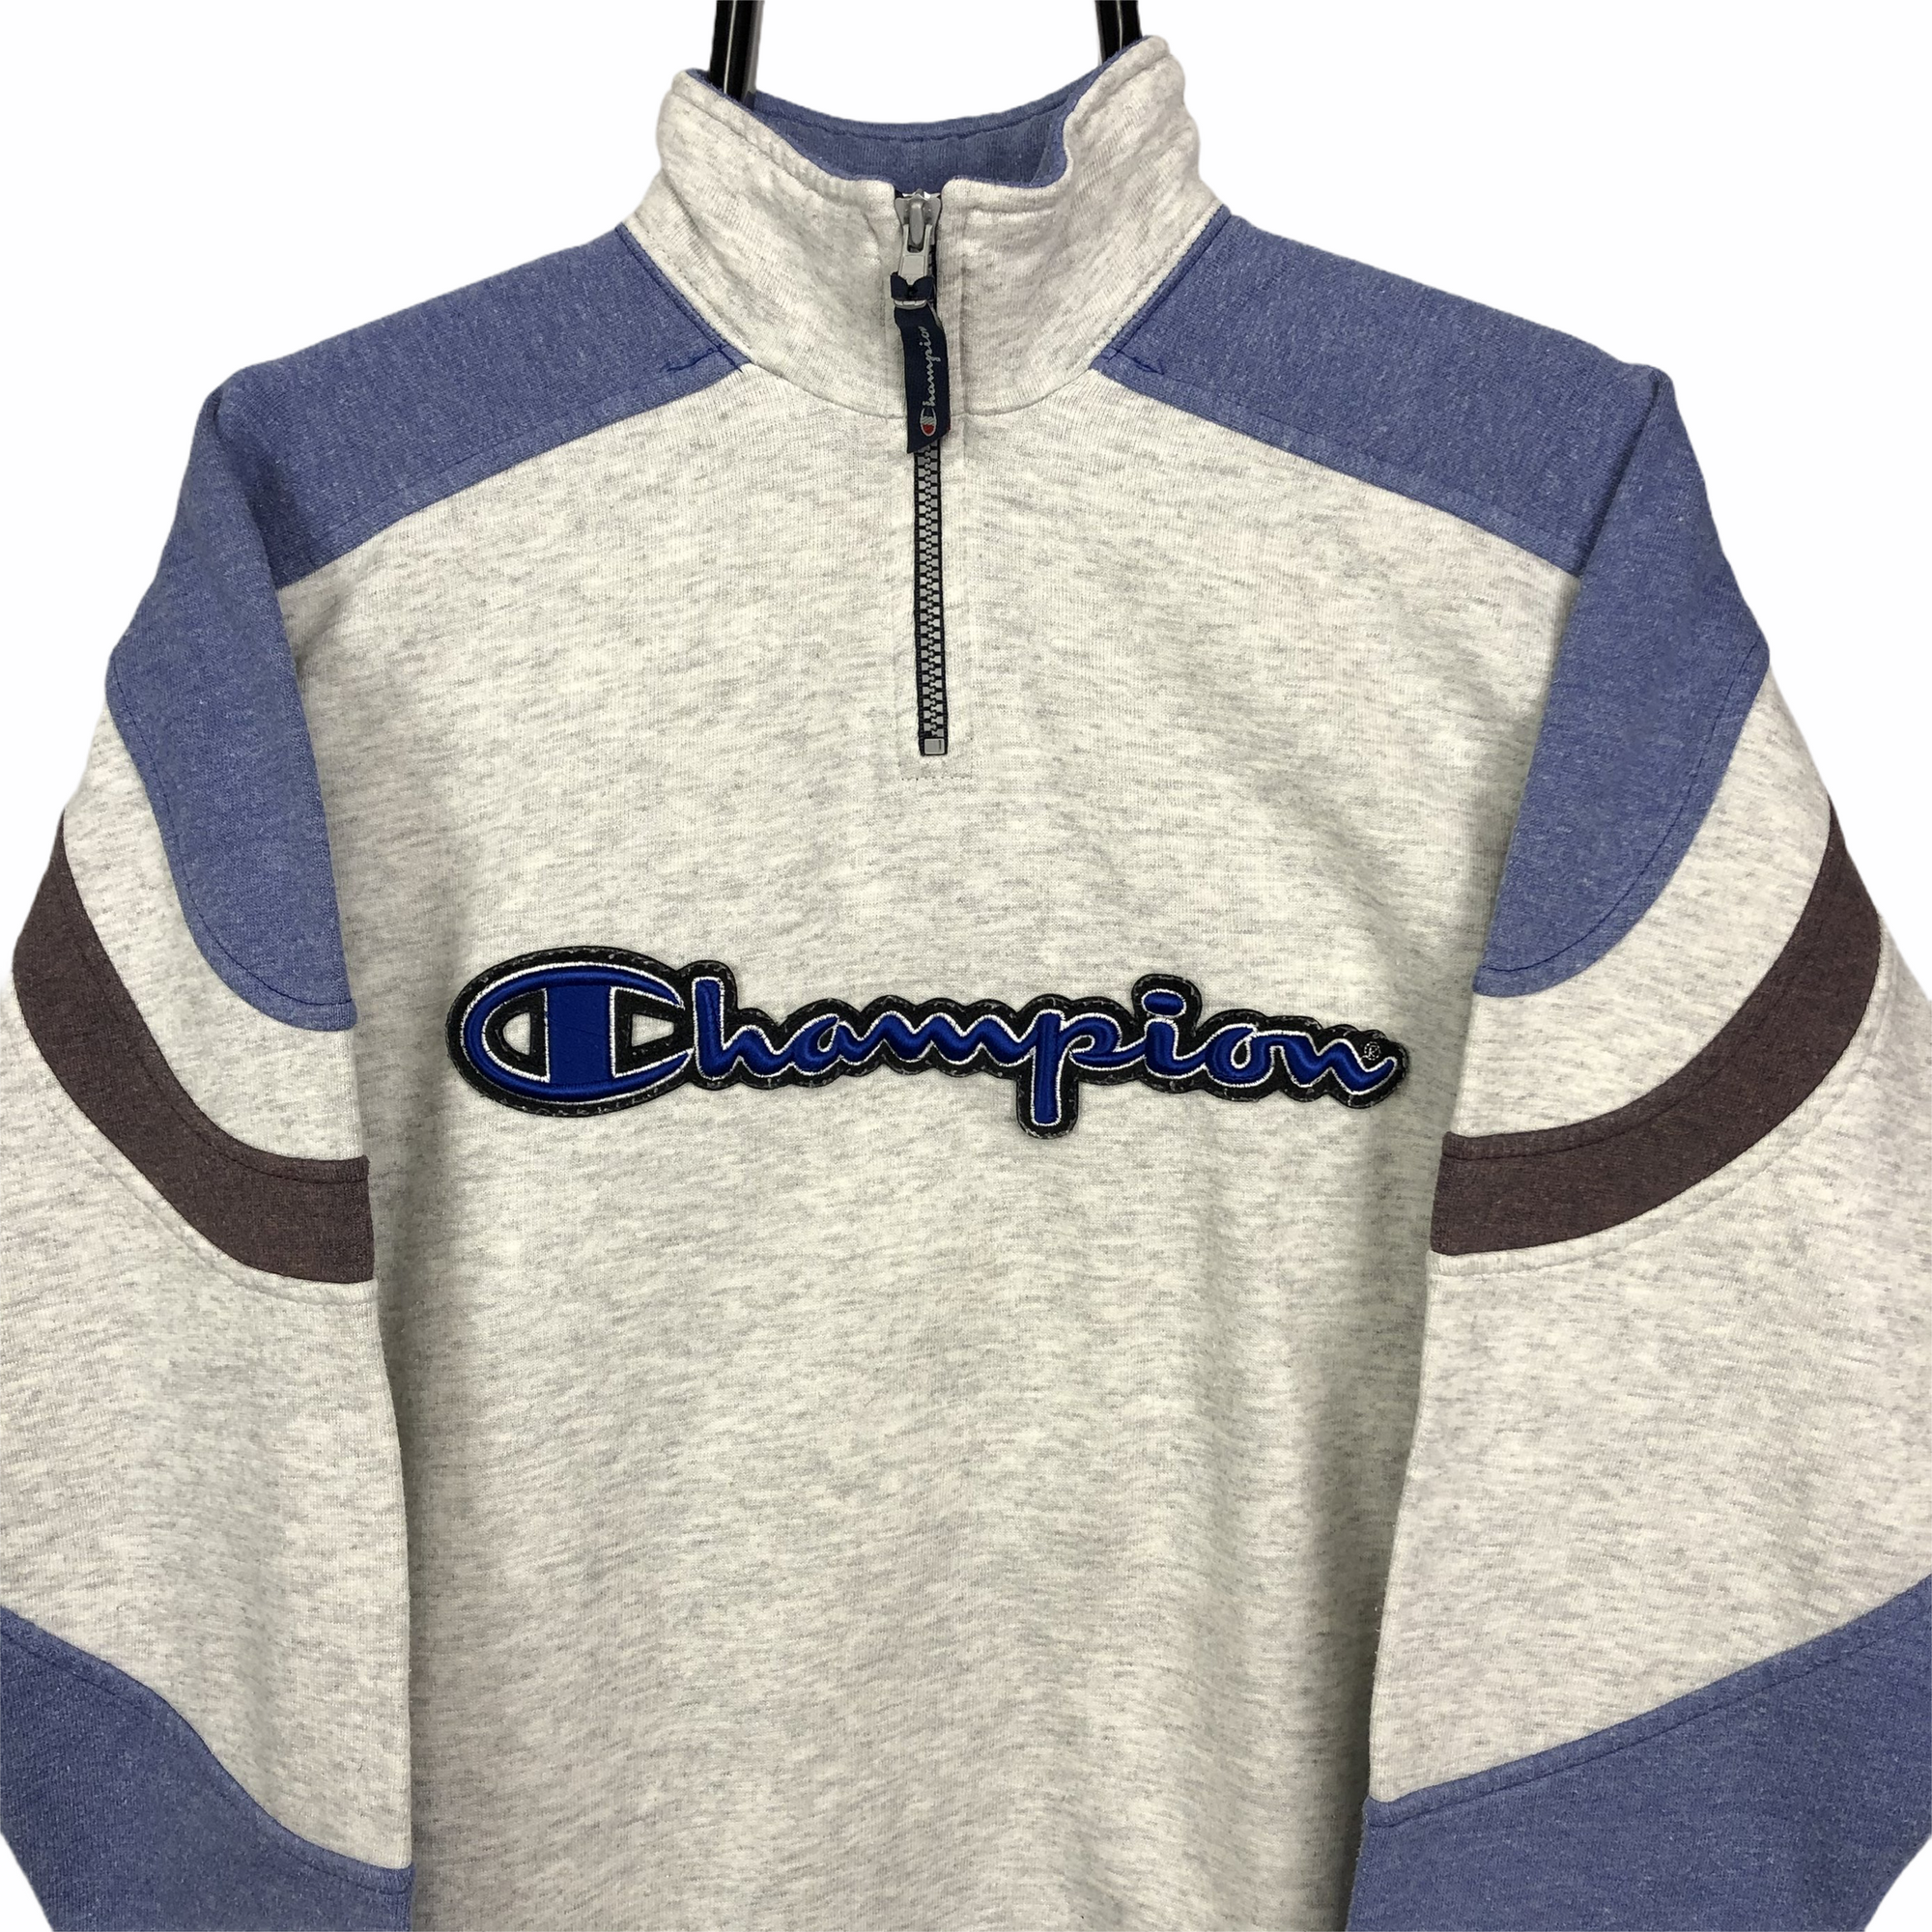 Vintage Champion Spellout 1/4 Zip Sweatshirt - Men's Medium/Women's Large